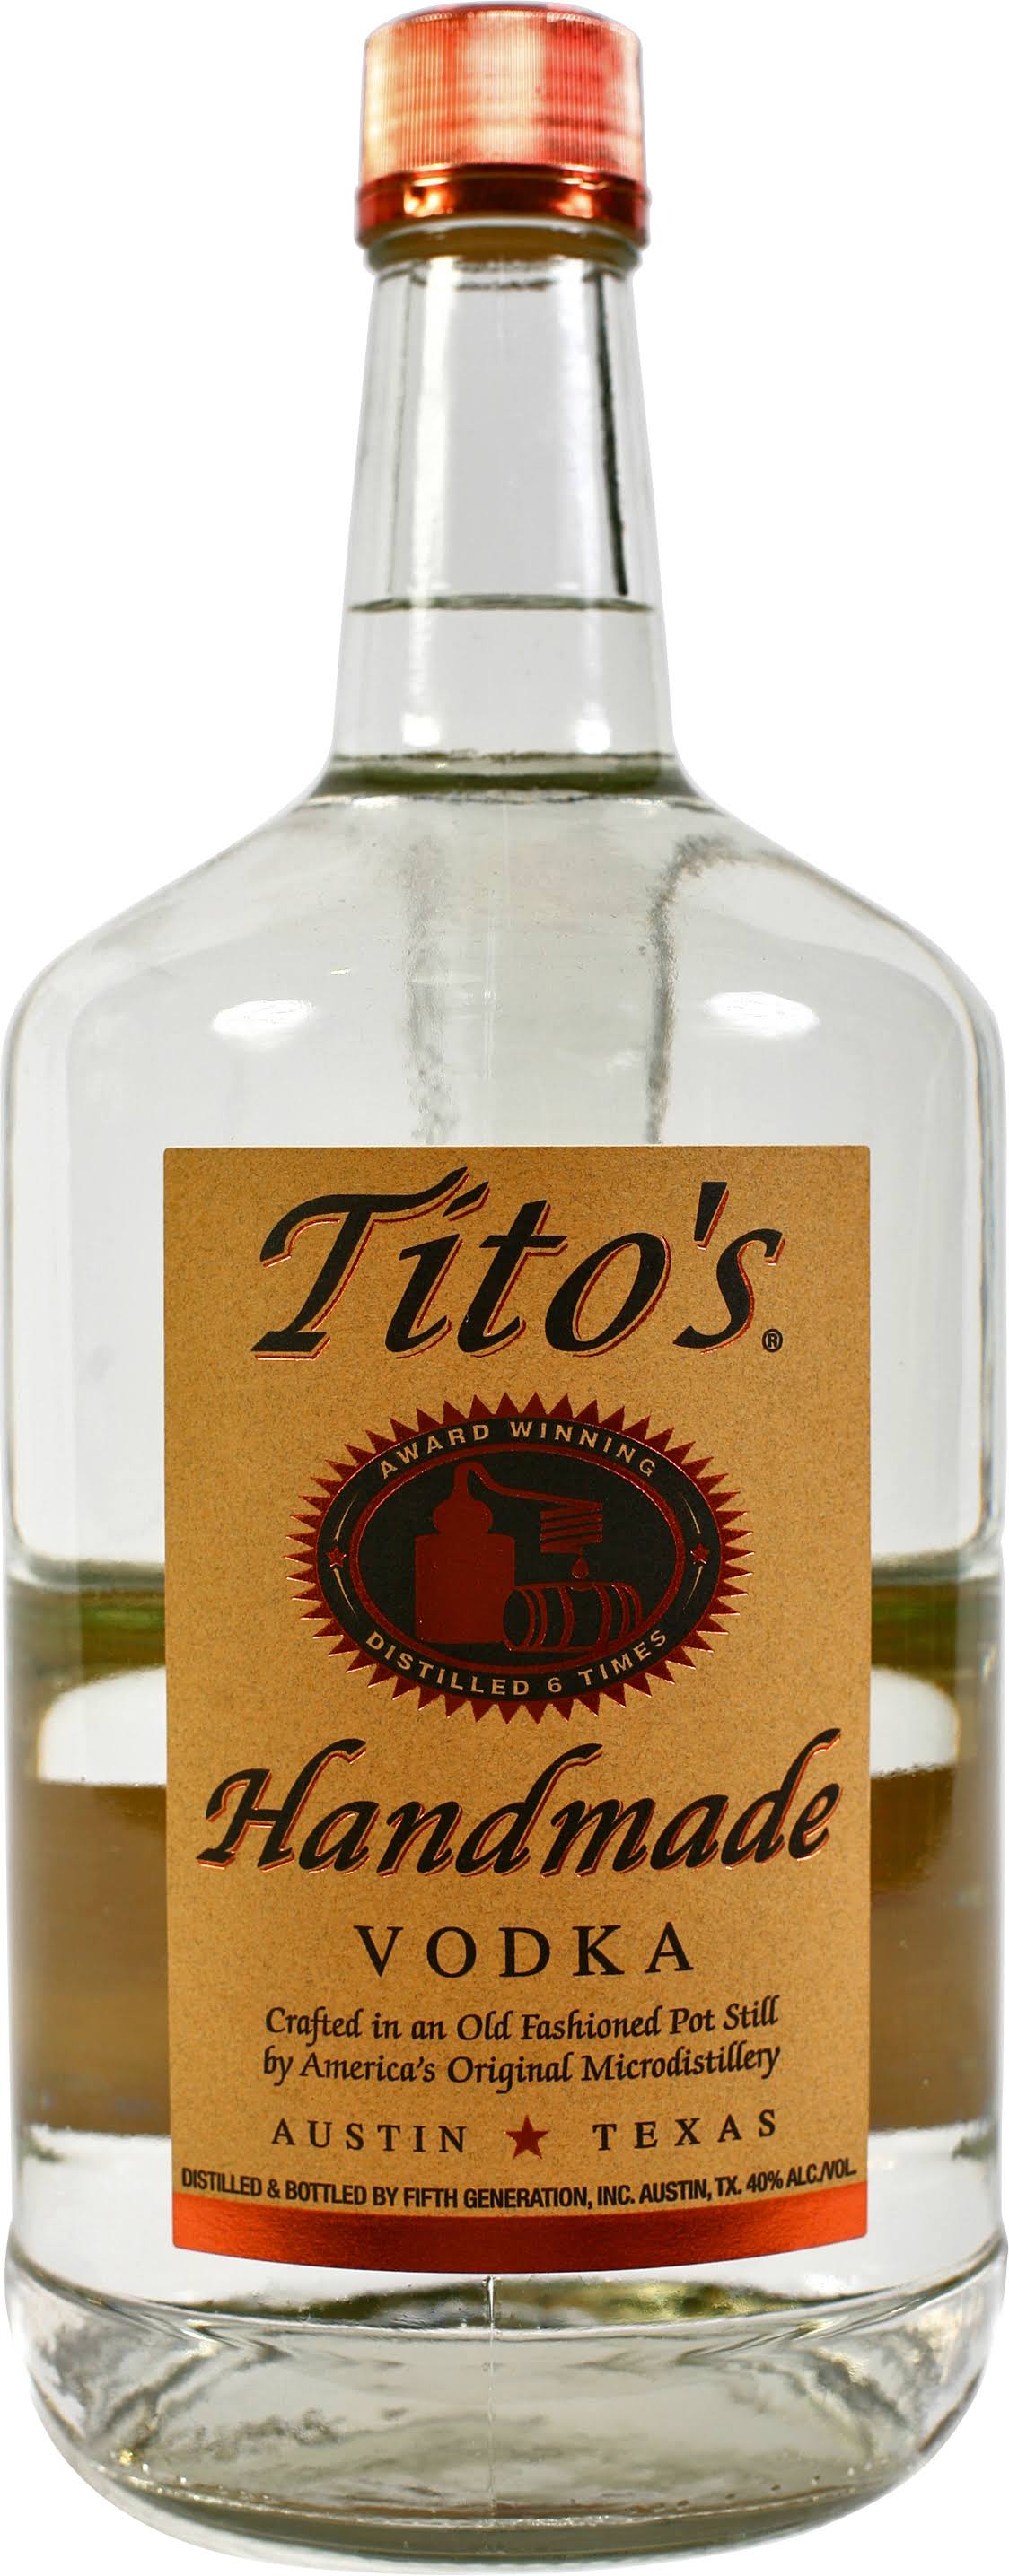 Titos Vodka, Handmade - 1.75 lSALE $29.99